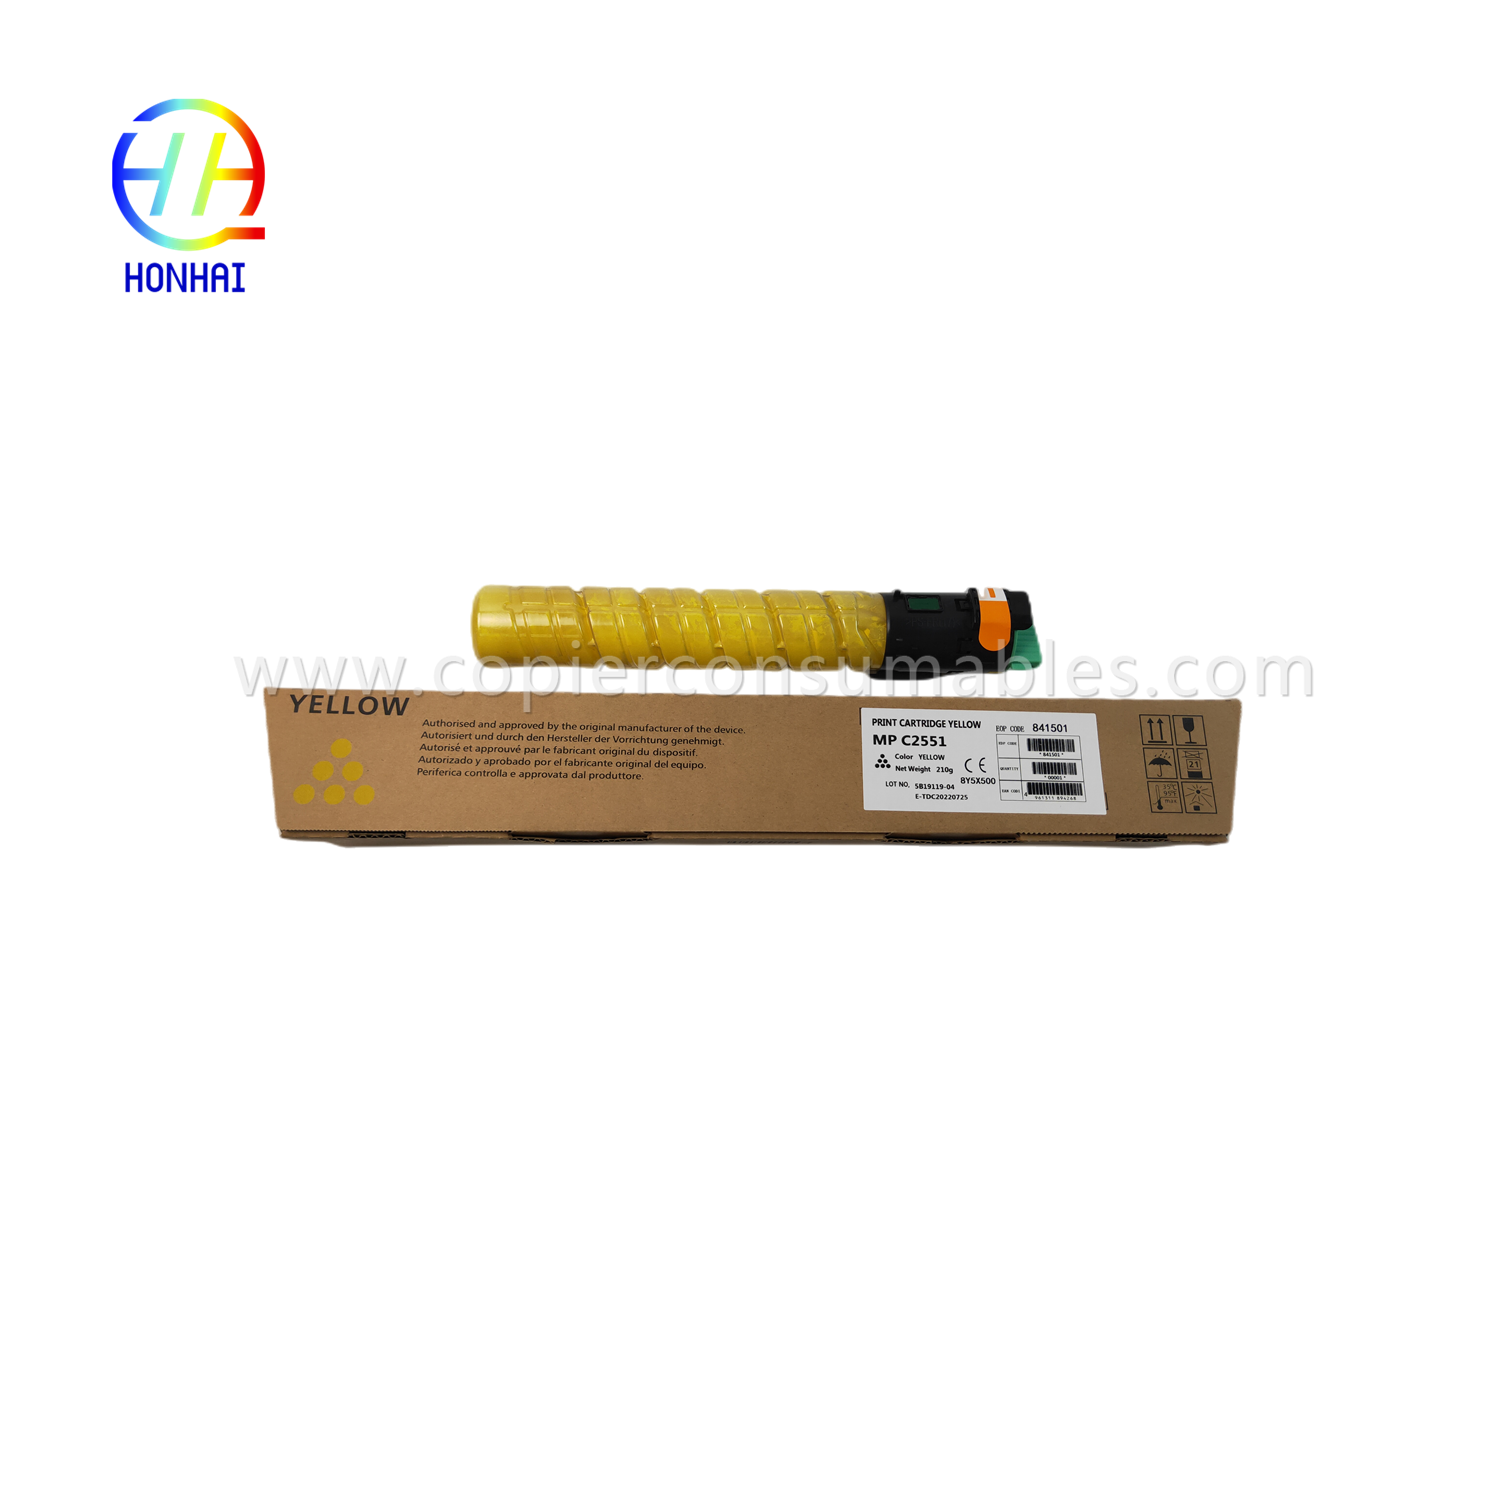 https://c585.goodao.net/toner-cartridge-yellow-for-ricoh-aficio-mpc2051-mpc2551-841501-product/